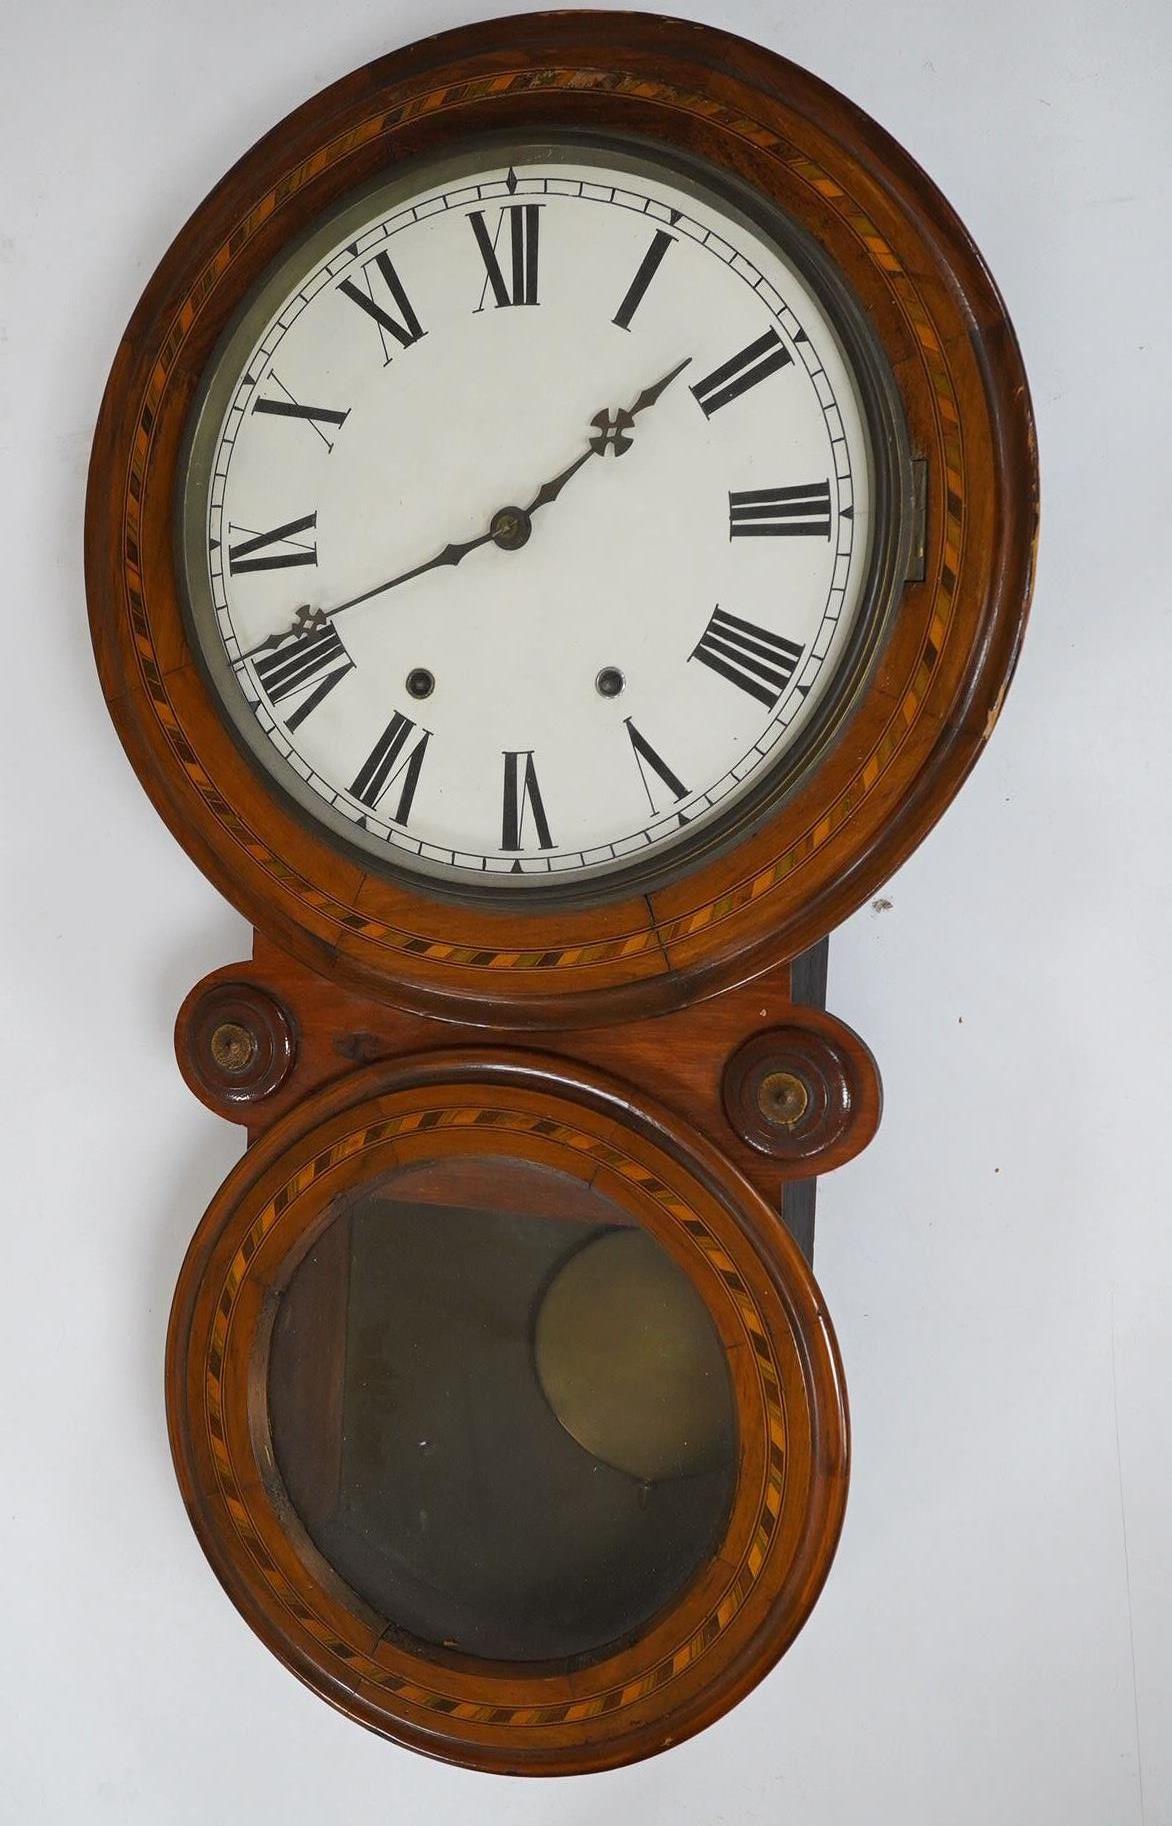 A Victorian parquetry inlaid wall clock with Arabic dial, 73cm high. Condition - fair to good